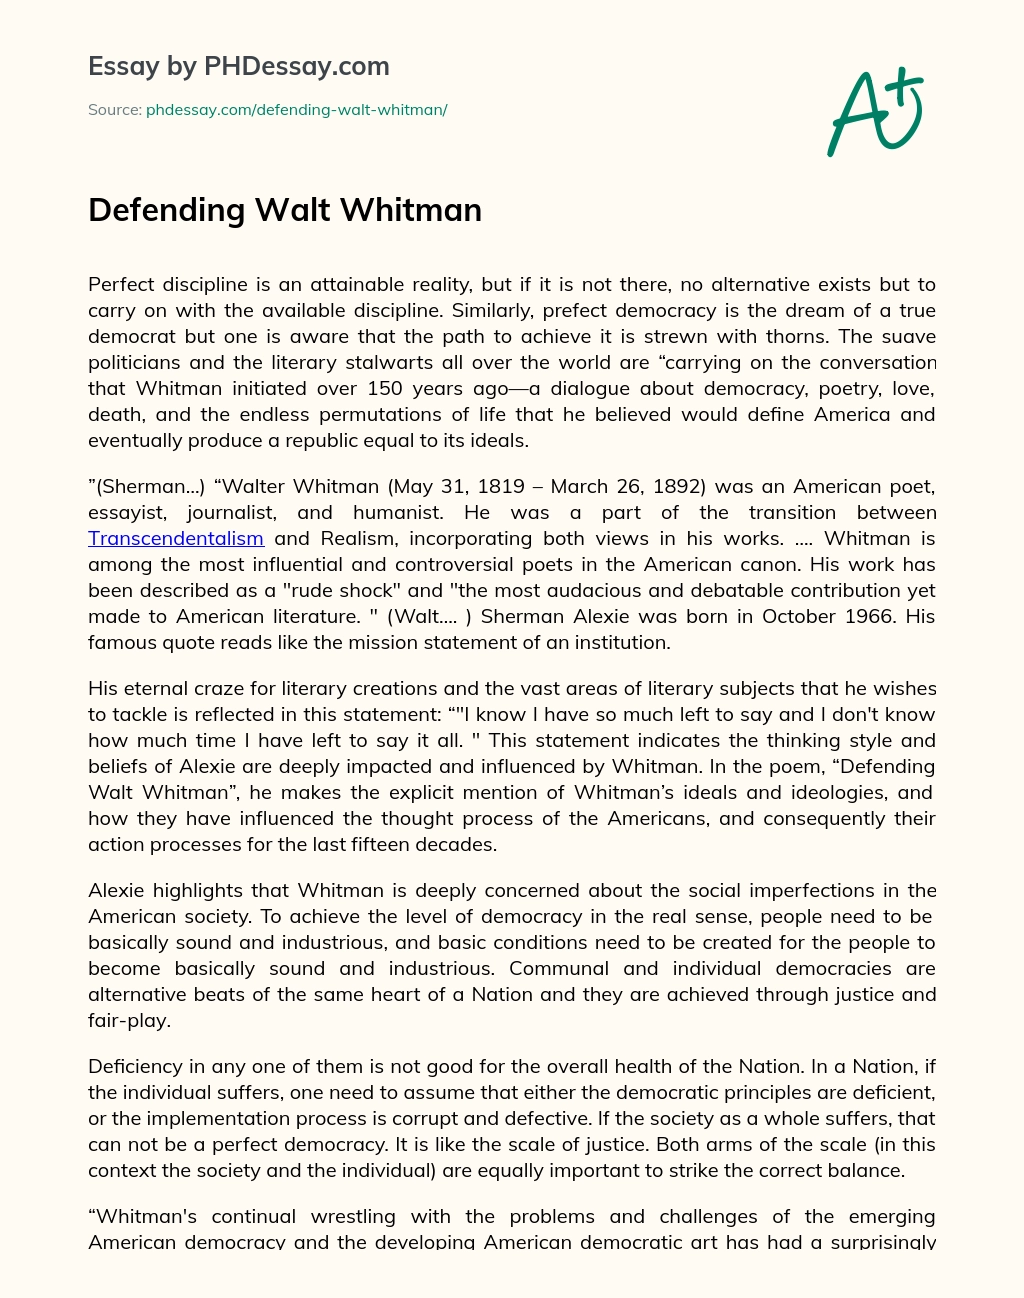 Defending Walt Whitman essay